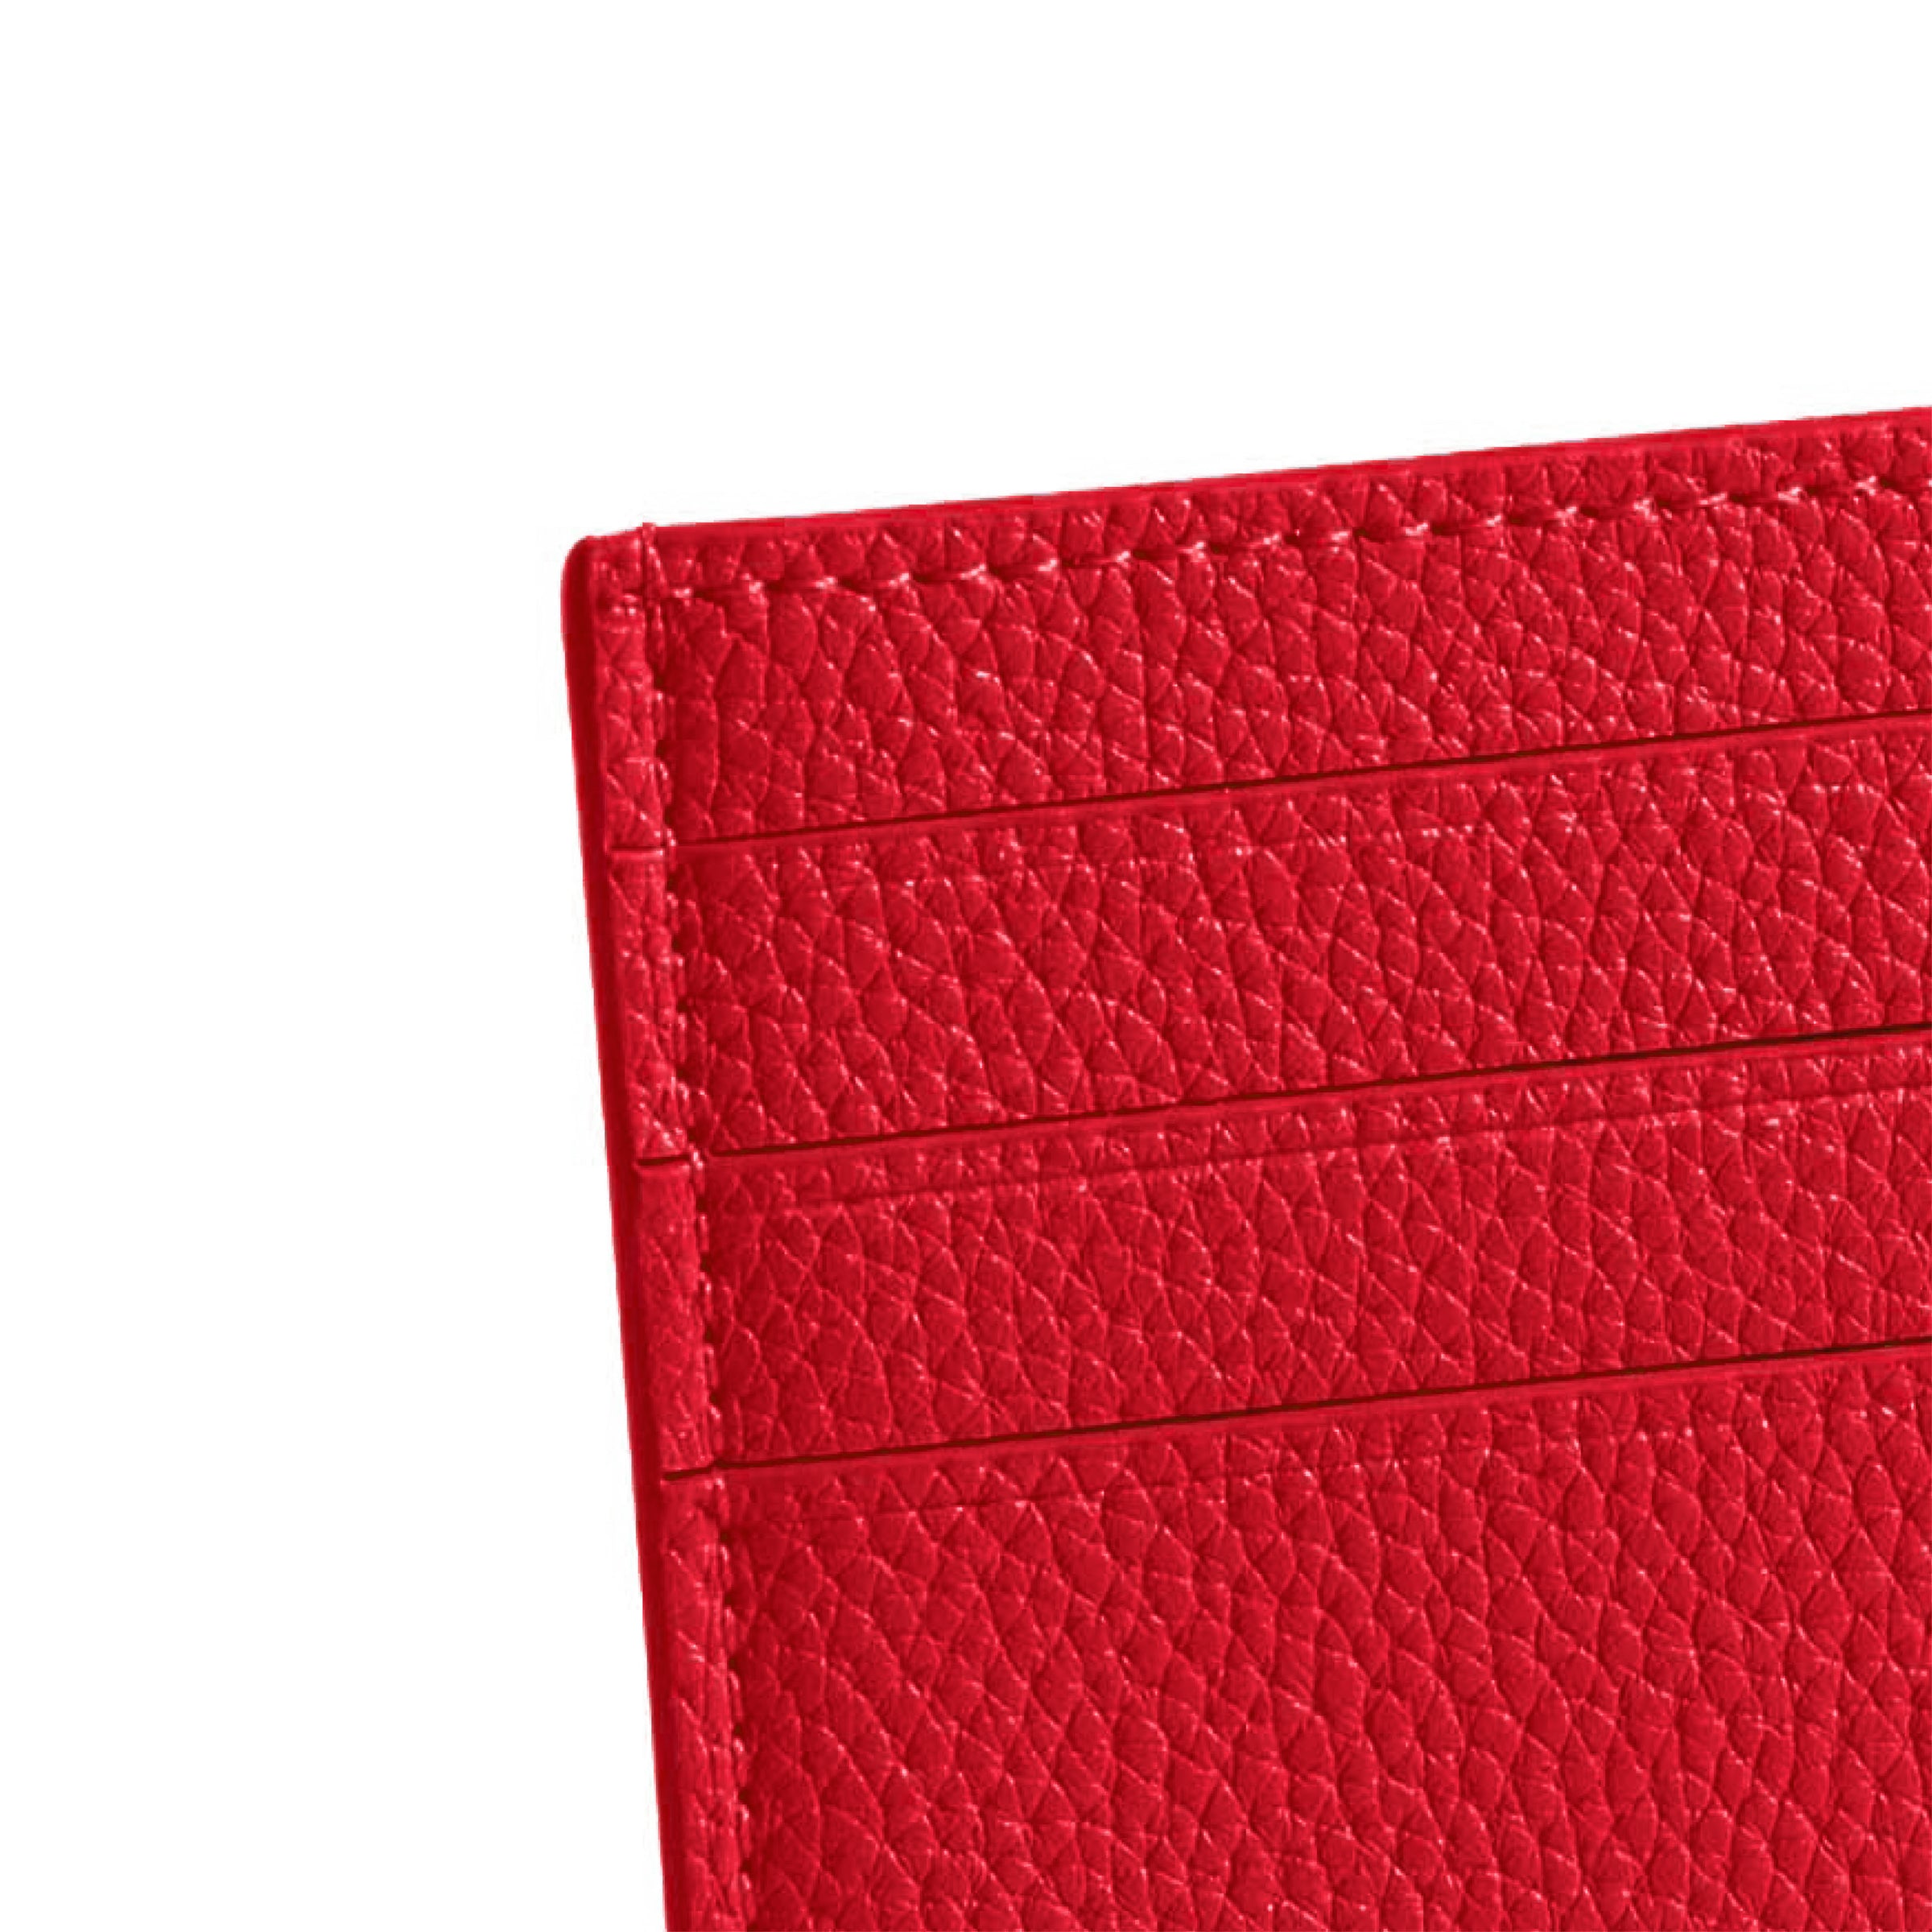 Card holder - Marilyn Red